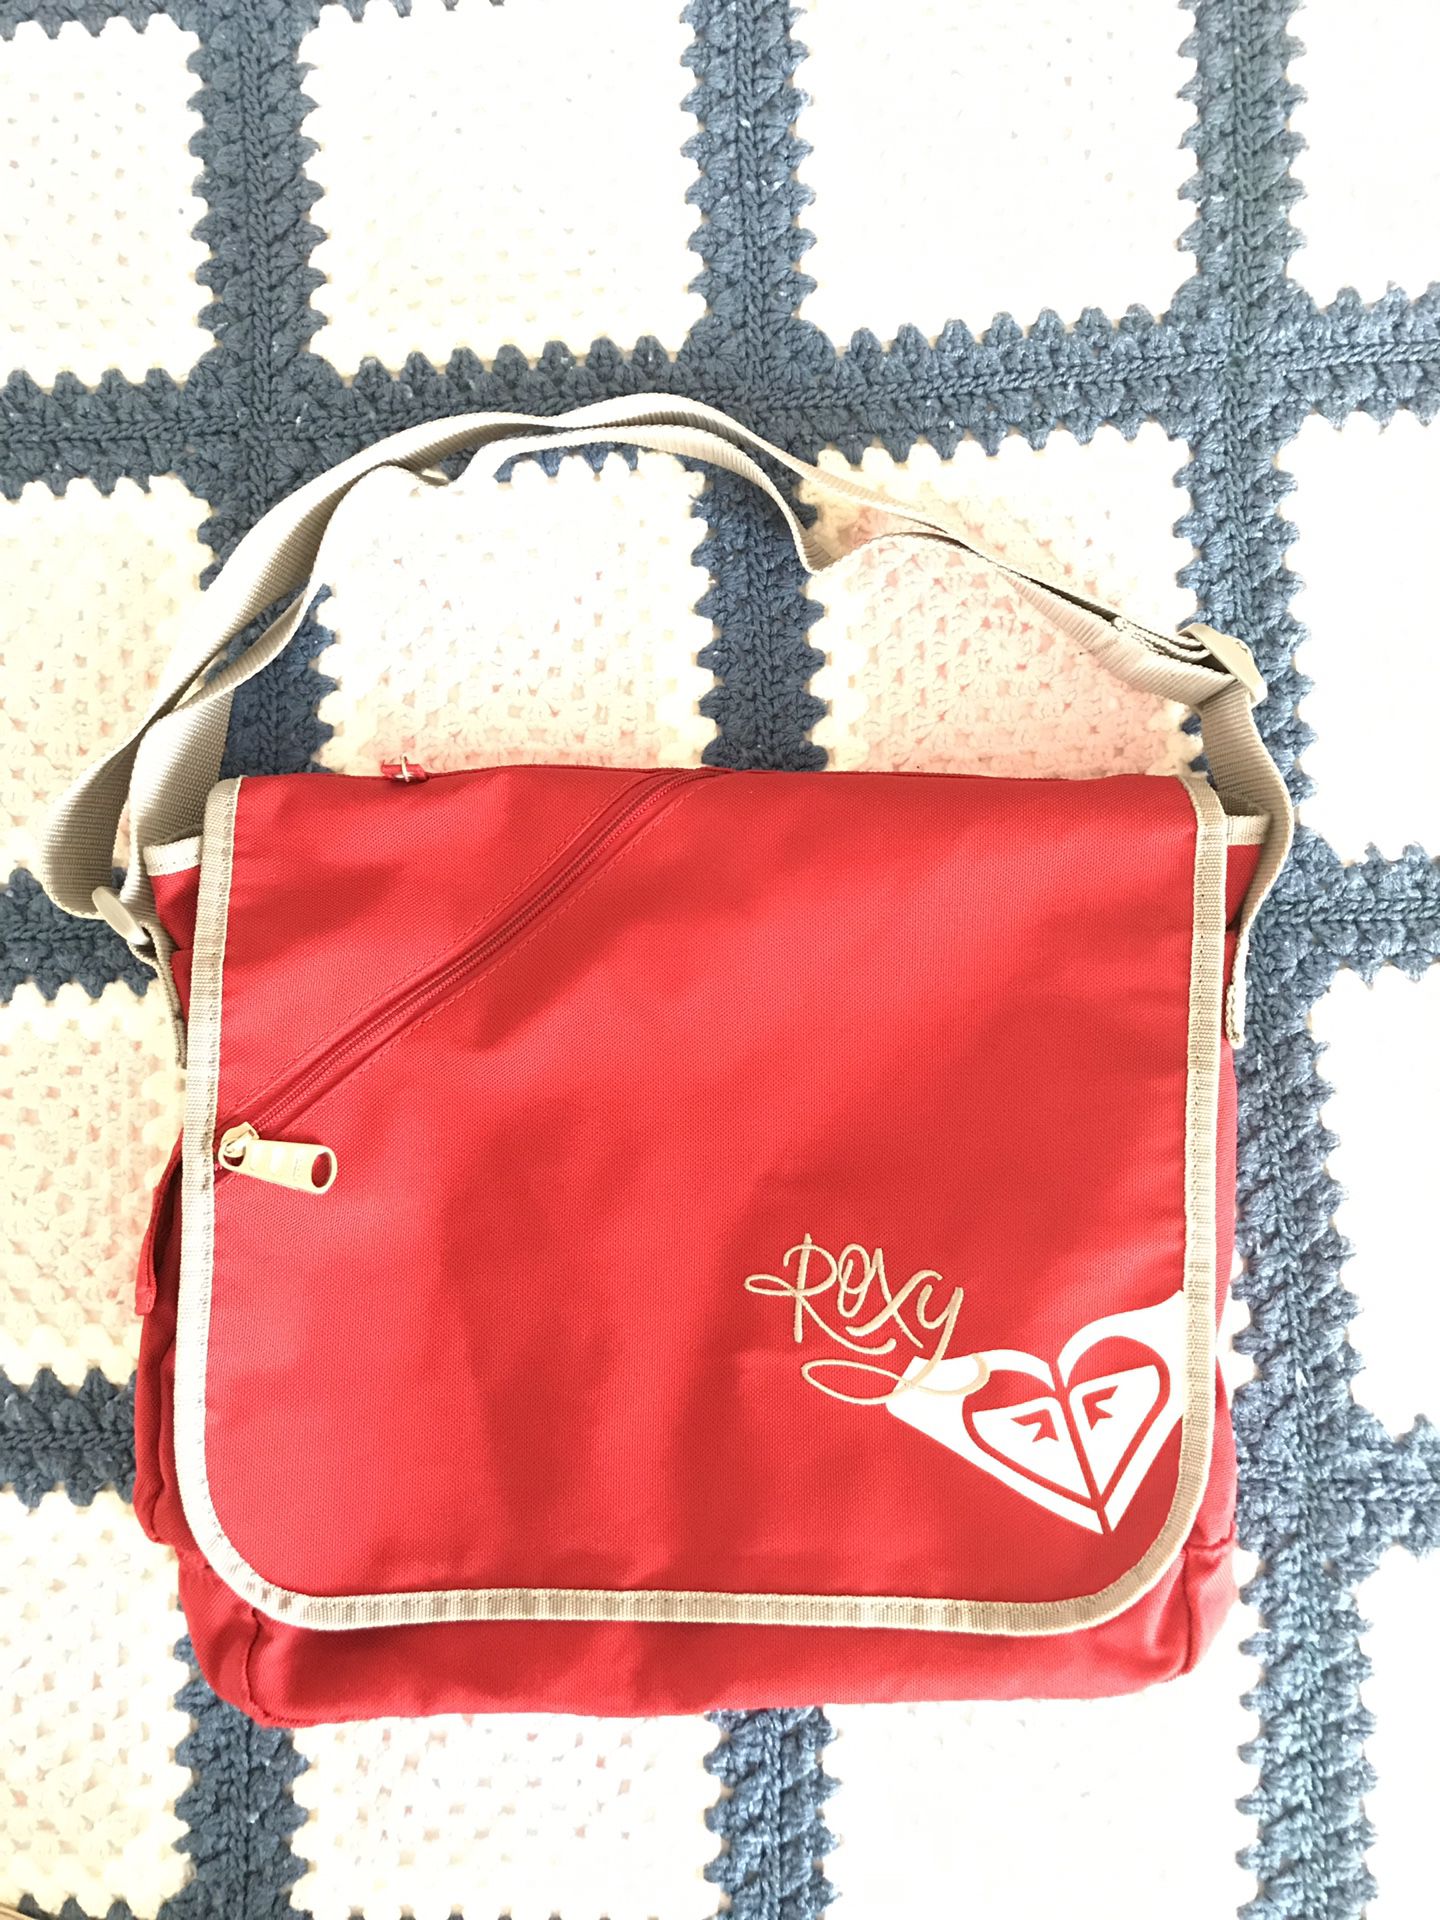 Roxy messenger bag